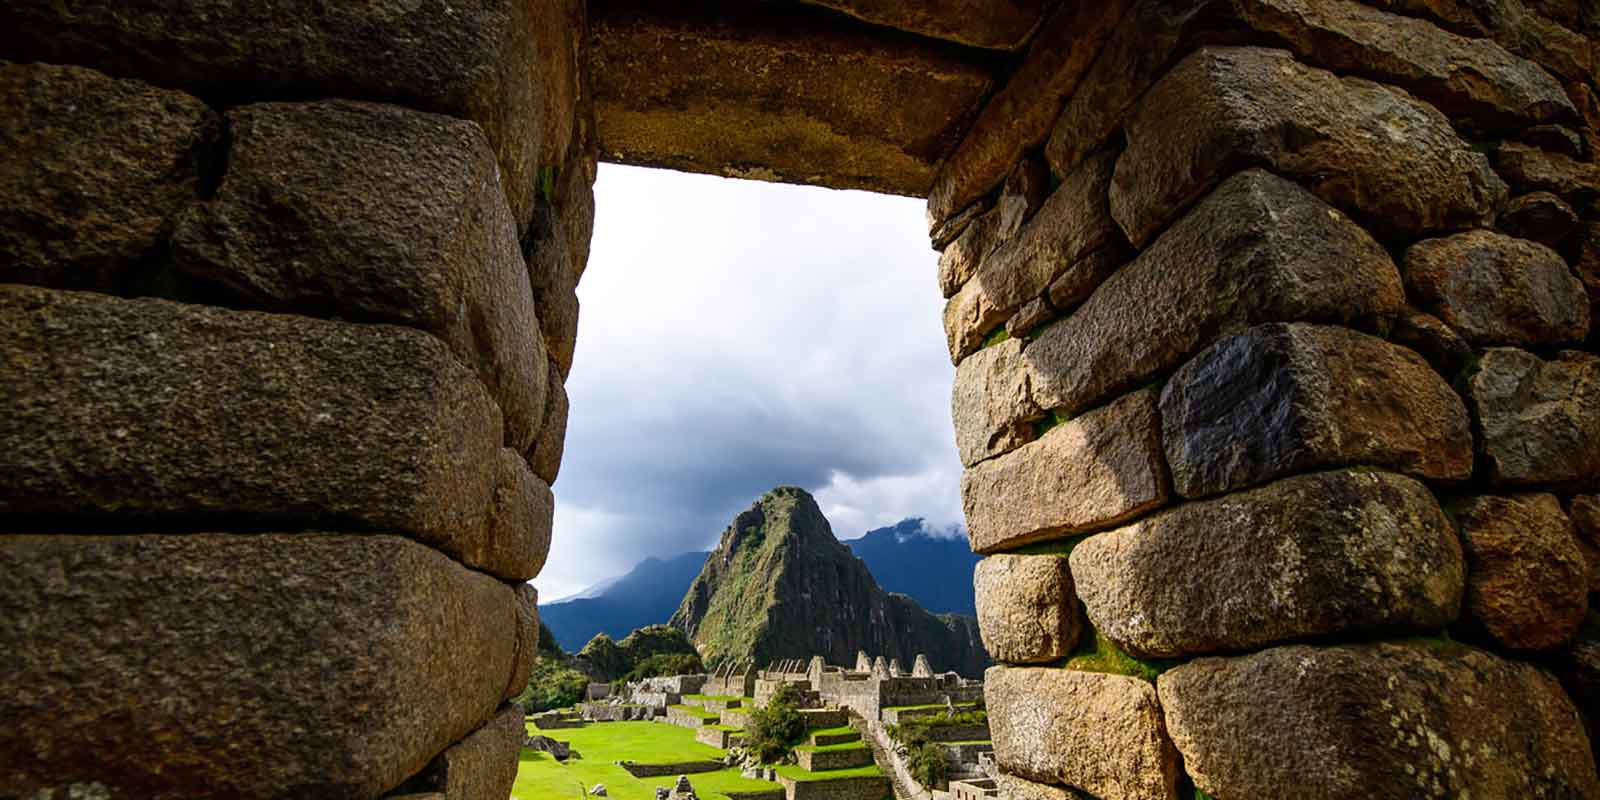 Full day tour to Machu Picchu by Vistadome train